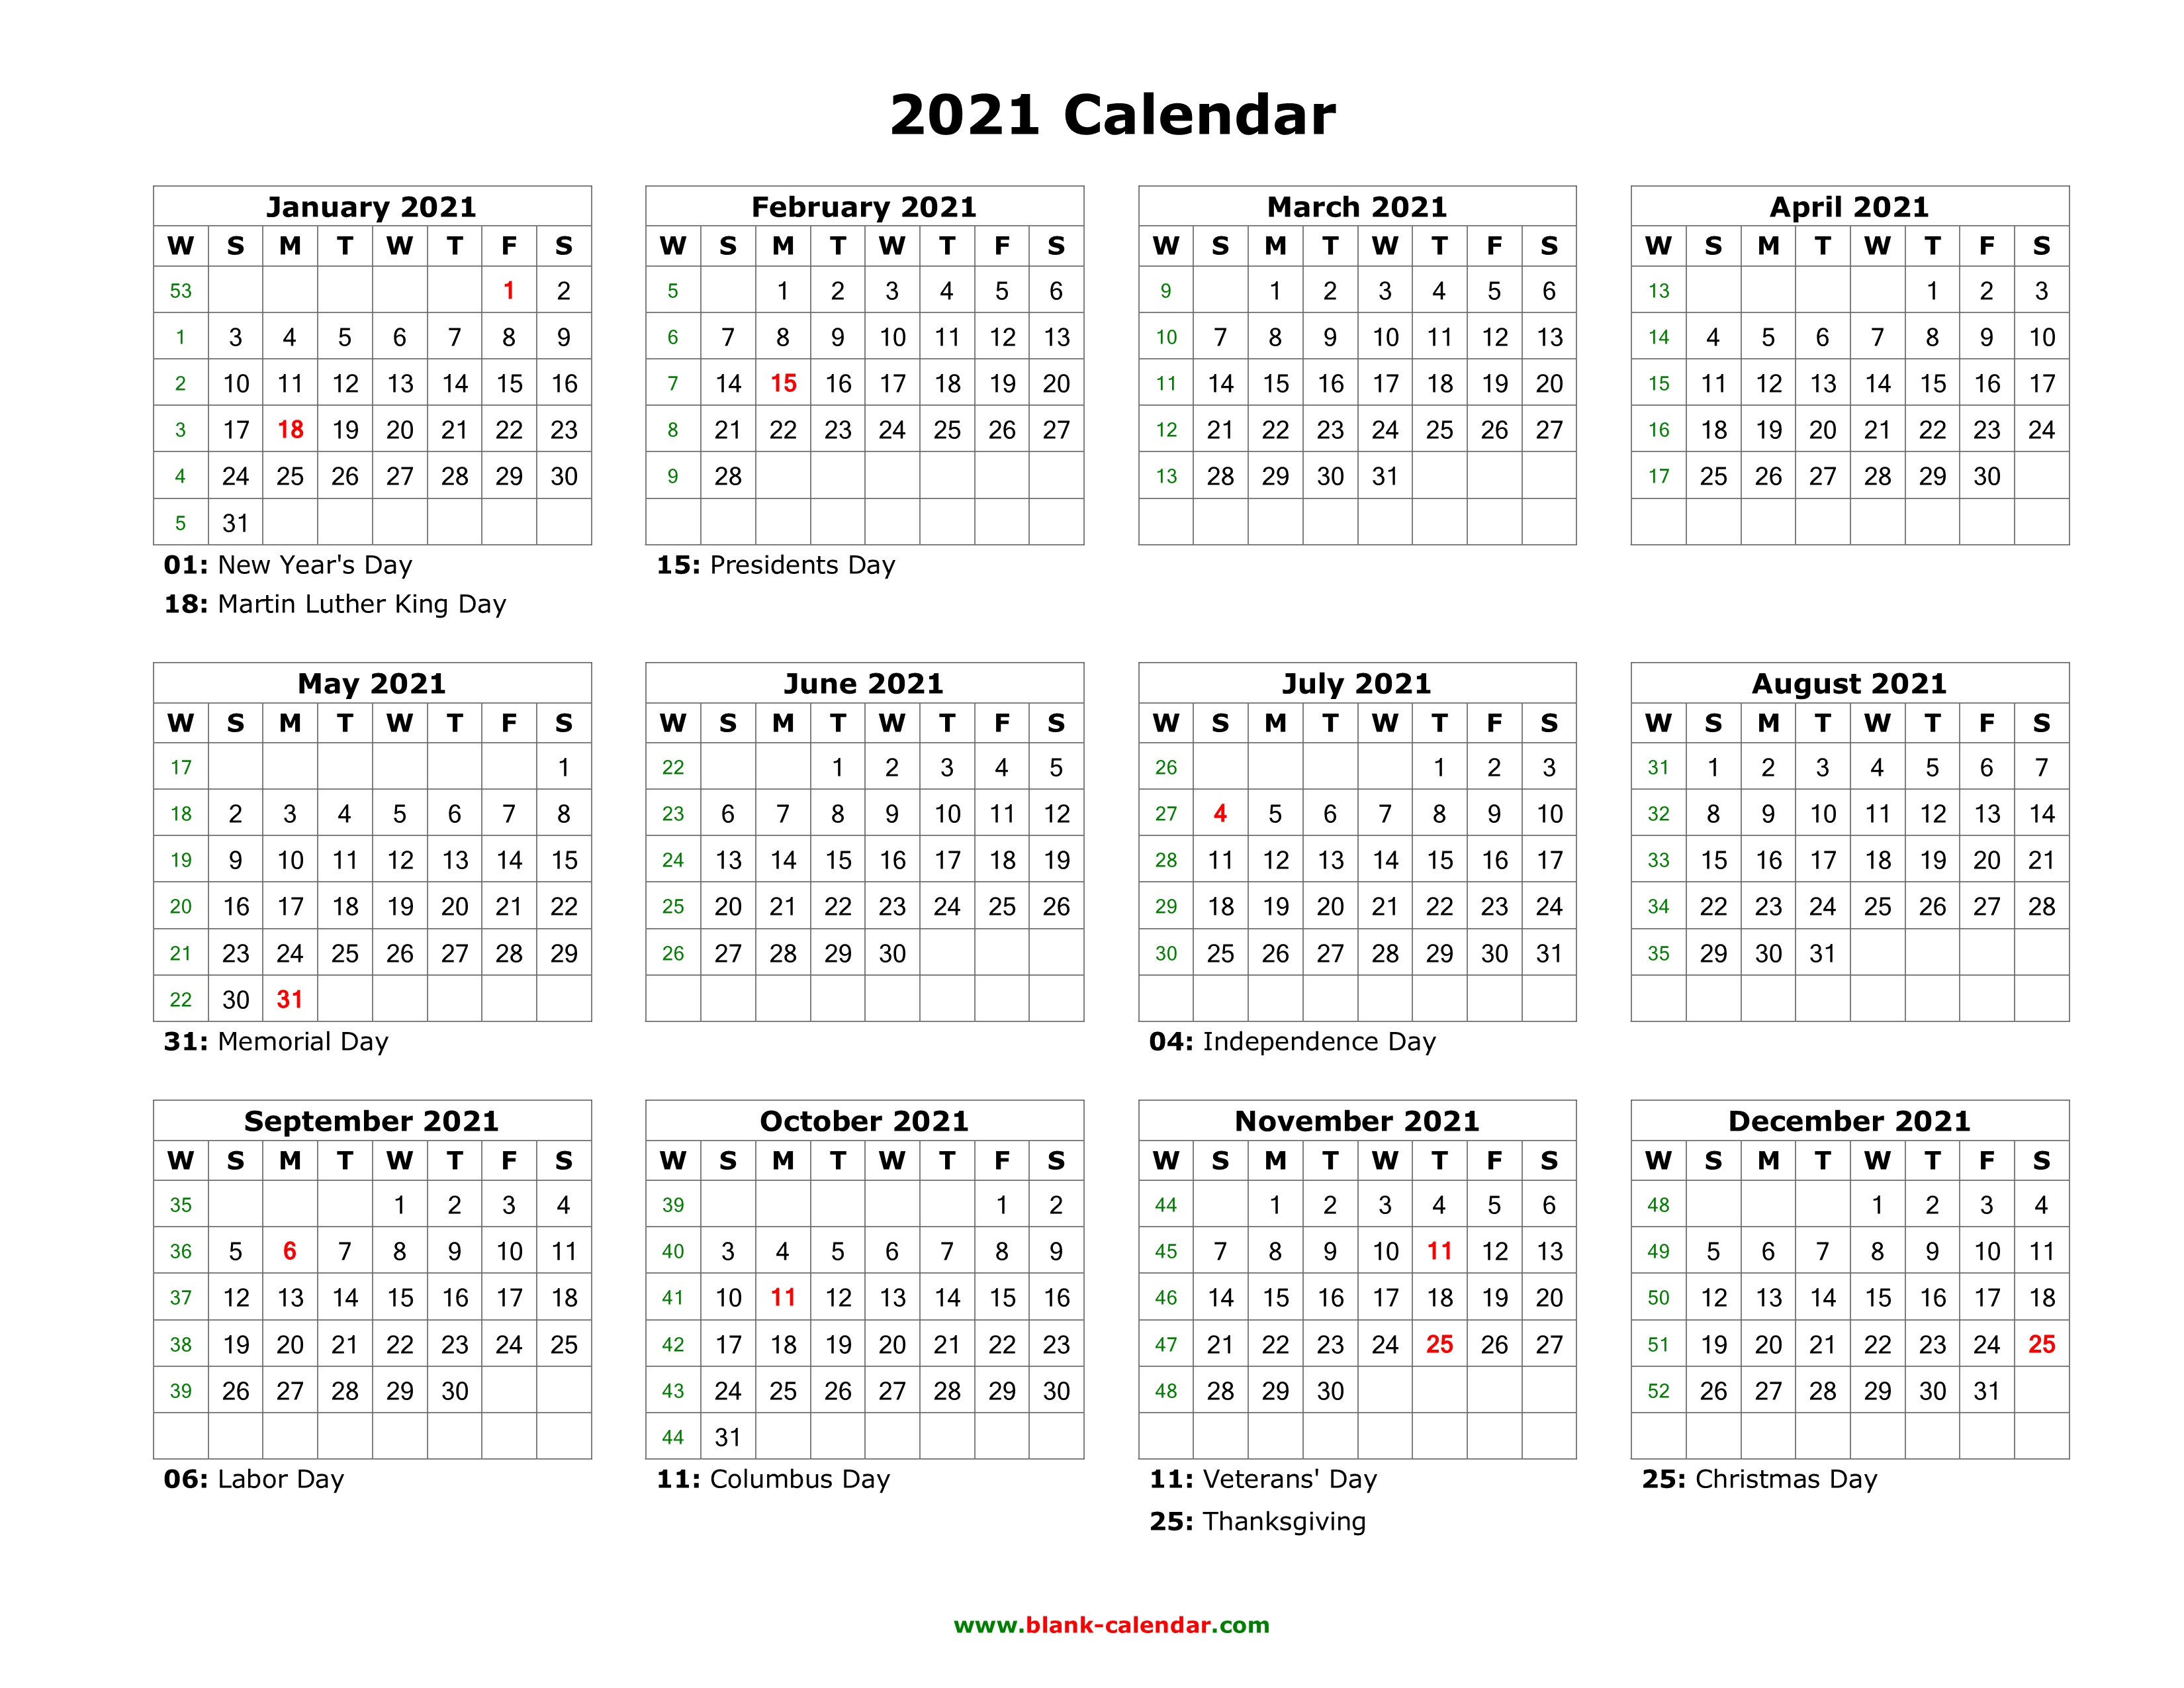 Blank Calendar 2021 | Free Download Calendar Templates